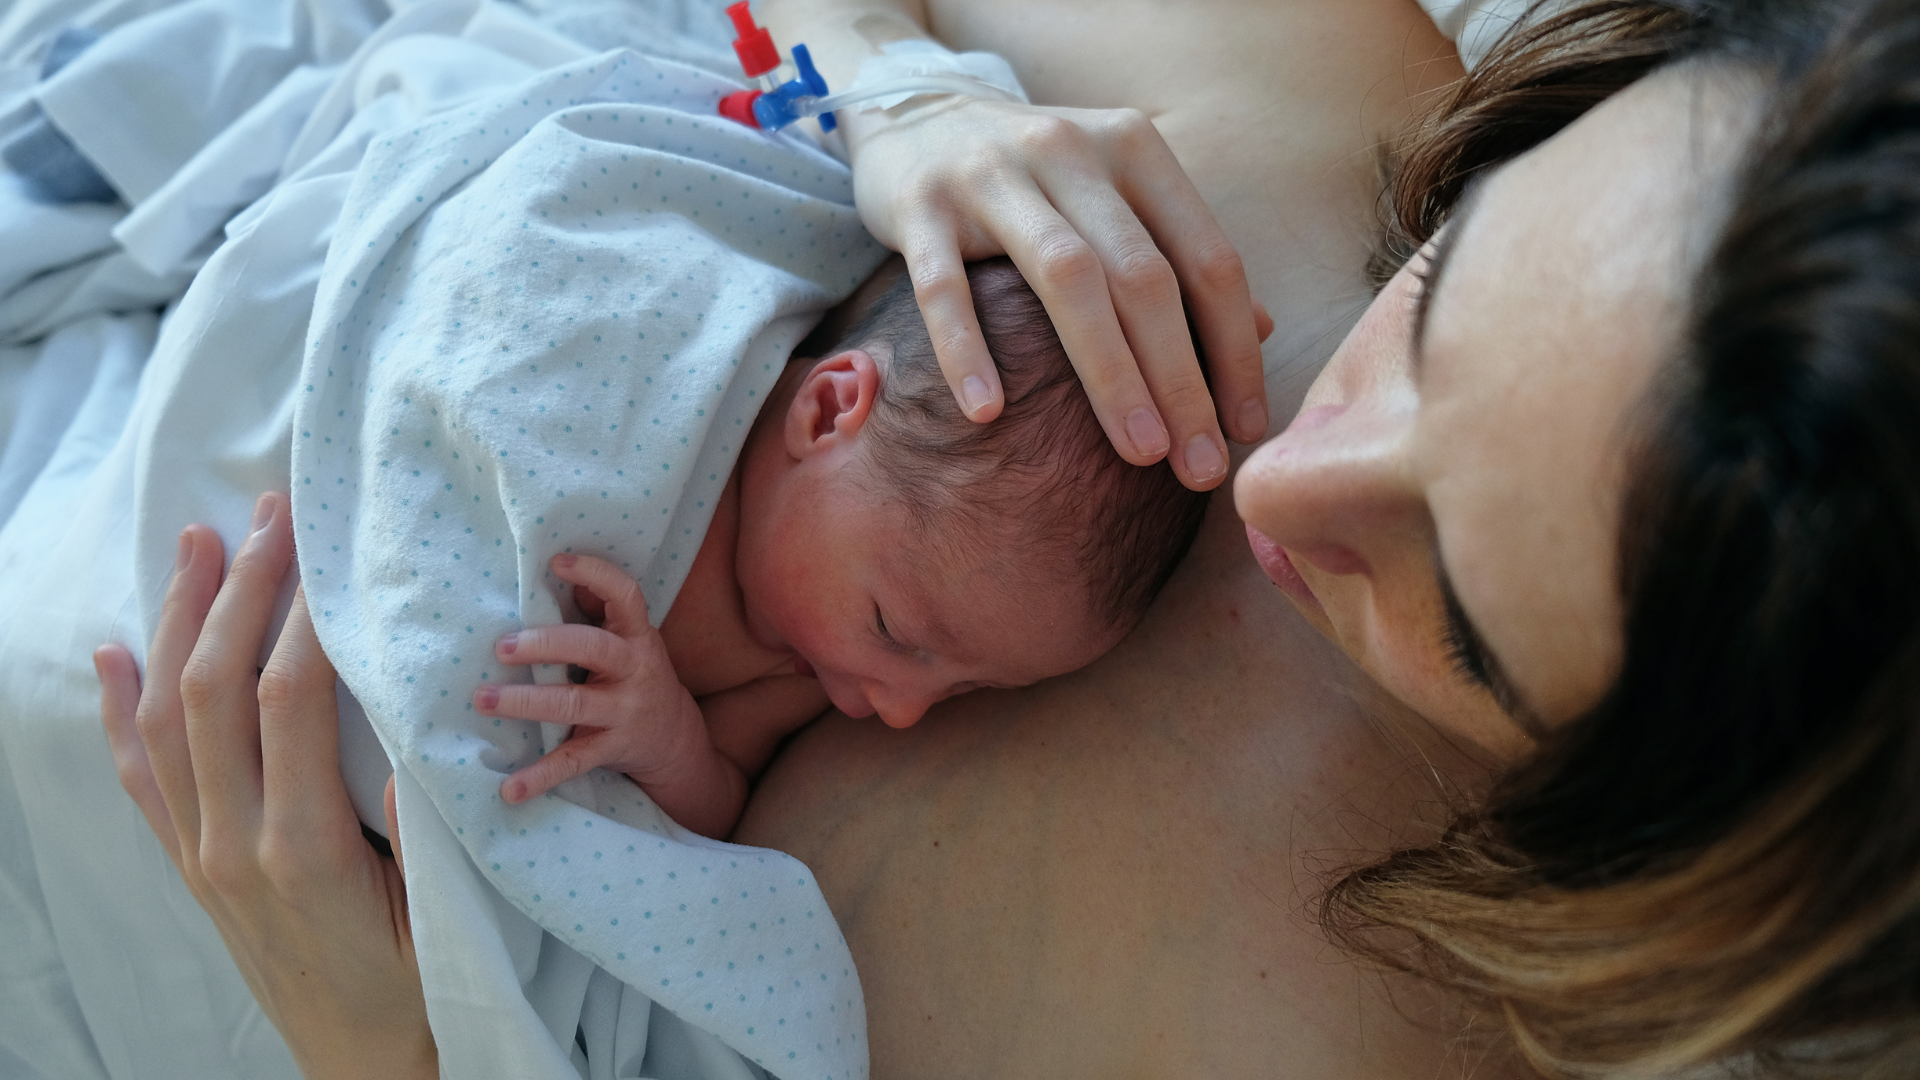 skin-to-skin contact, breastfeeding in hospital, baby and mom skin to skin